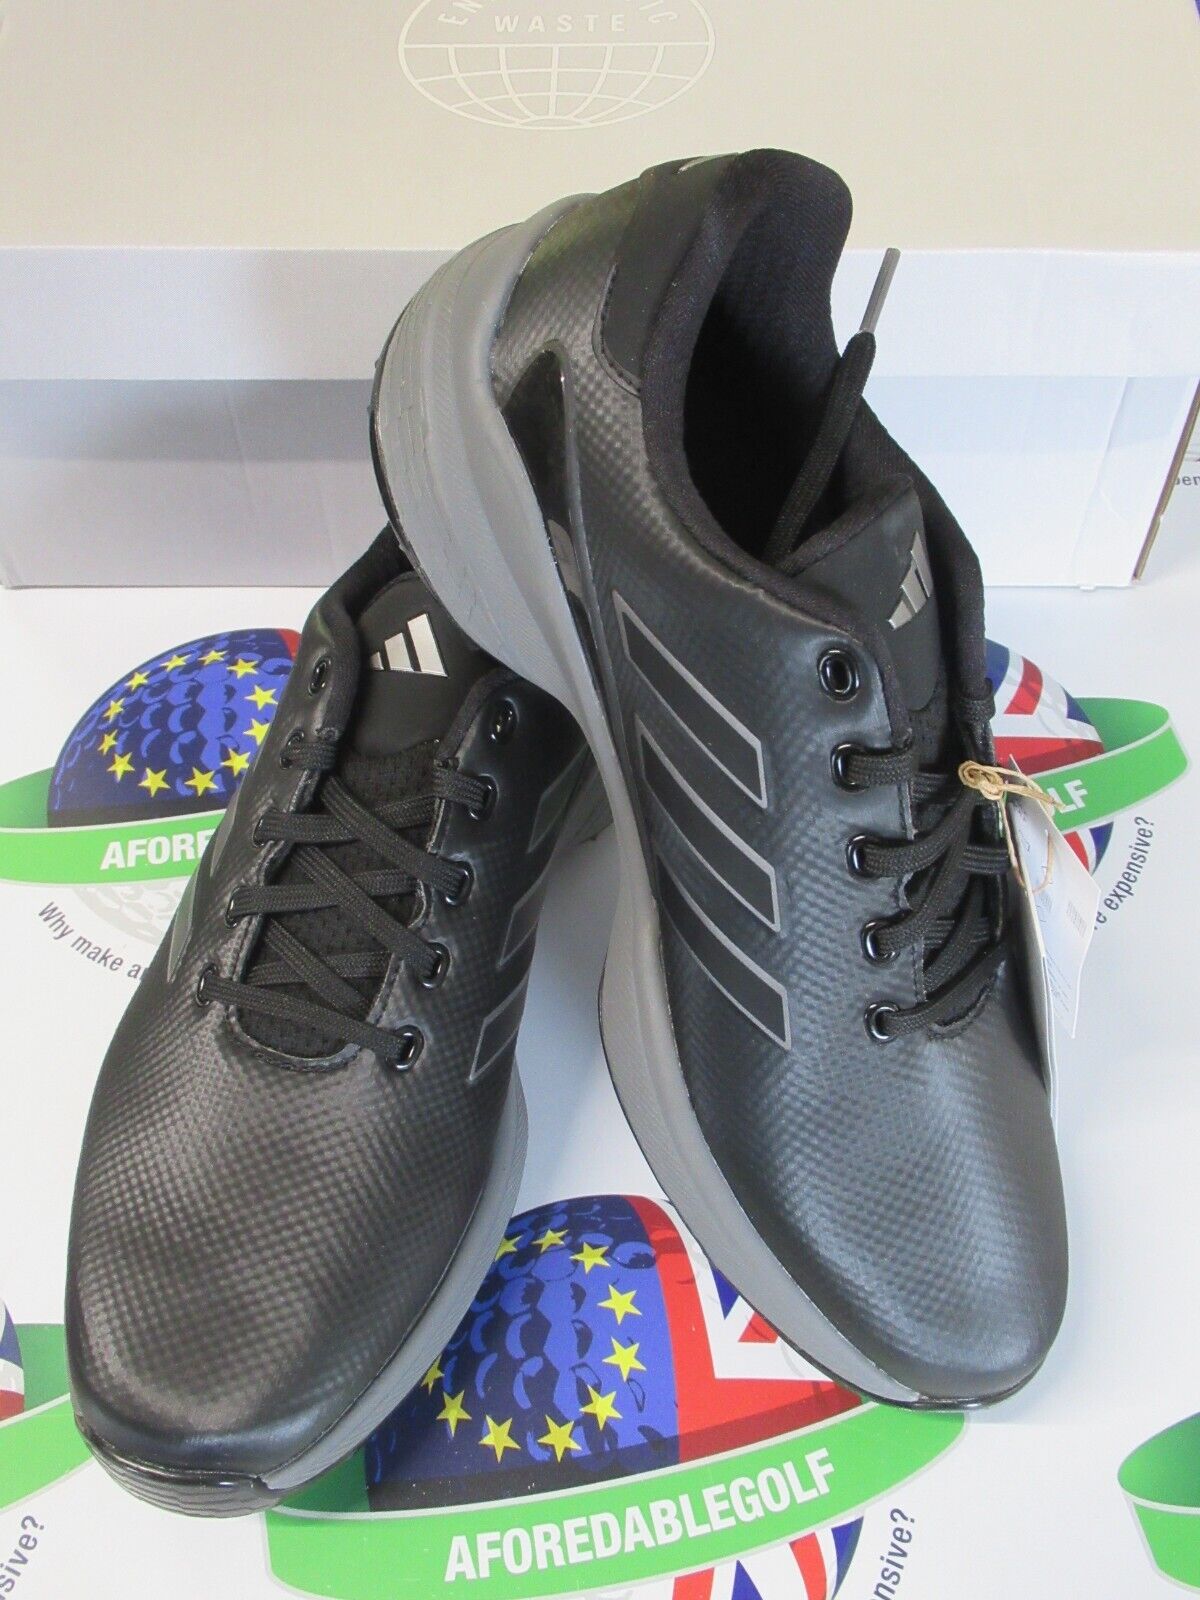 adidas zg23 waterproof golf shoes black/grey uk size 9